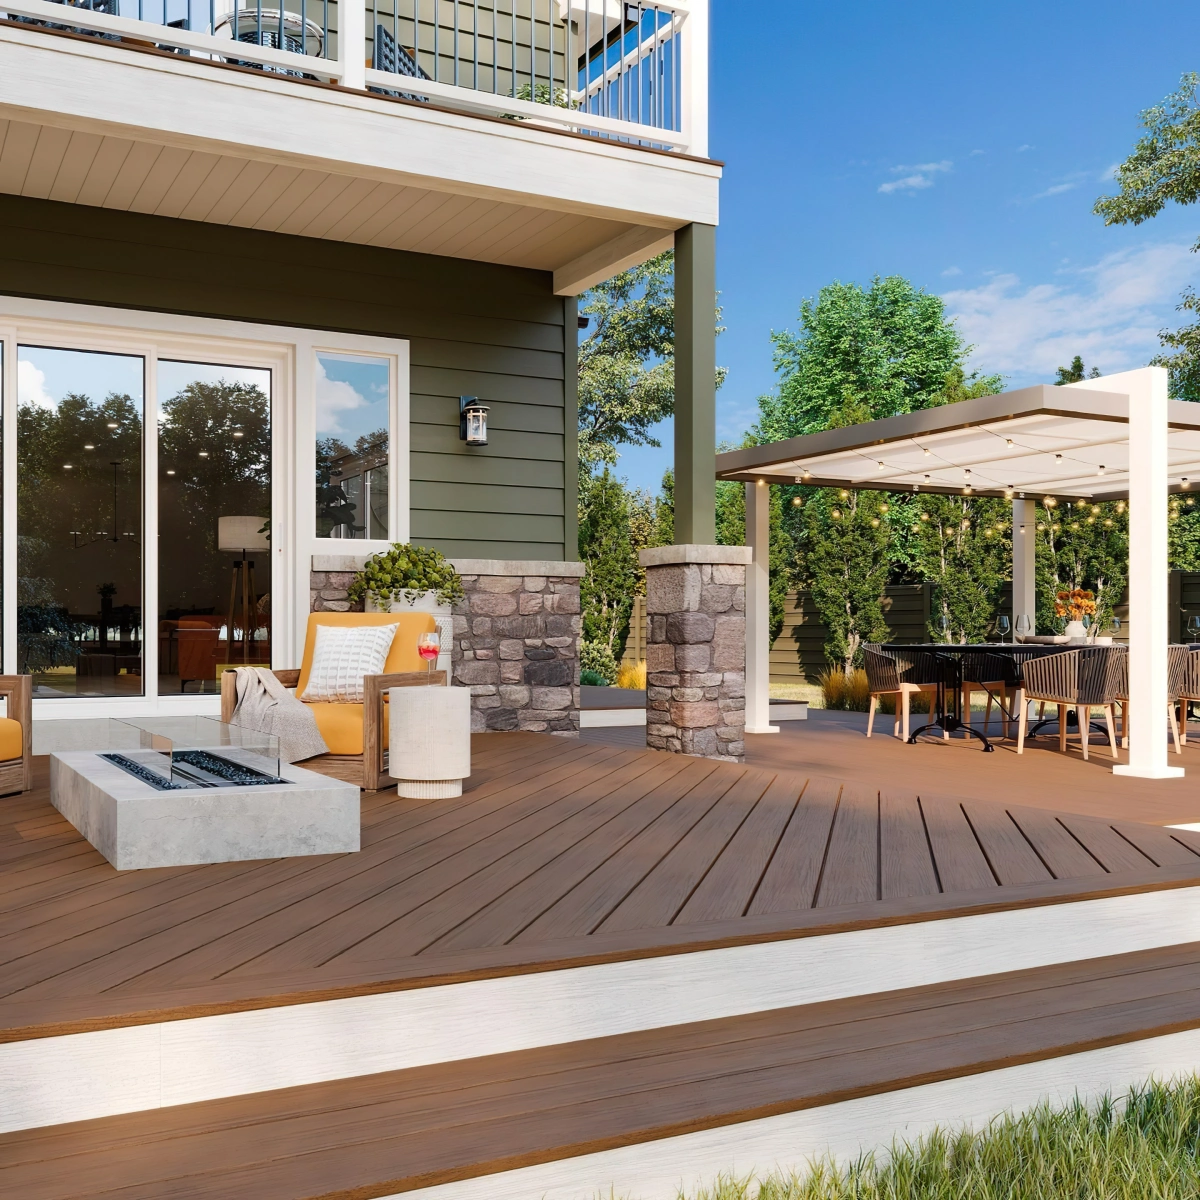 terrasse design exterieur revetement sol bois brasero verre et beton